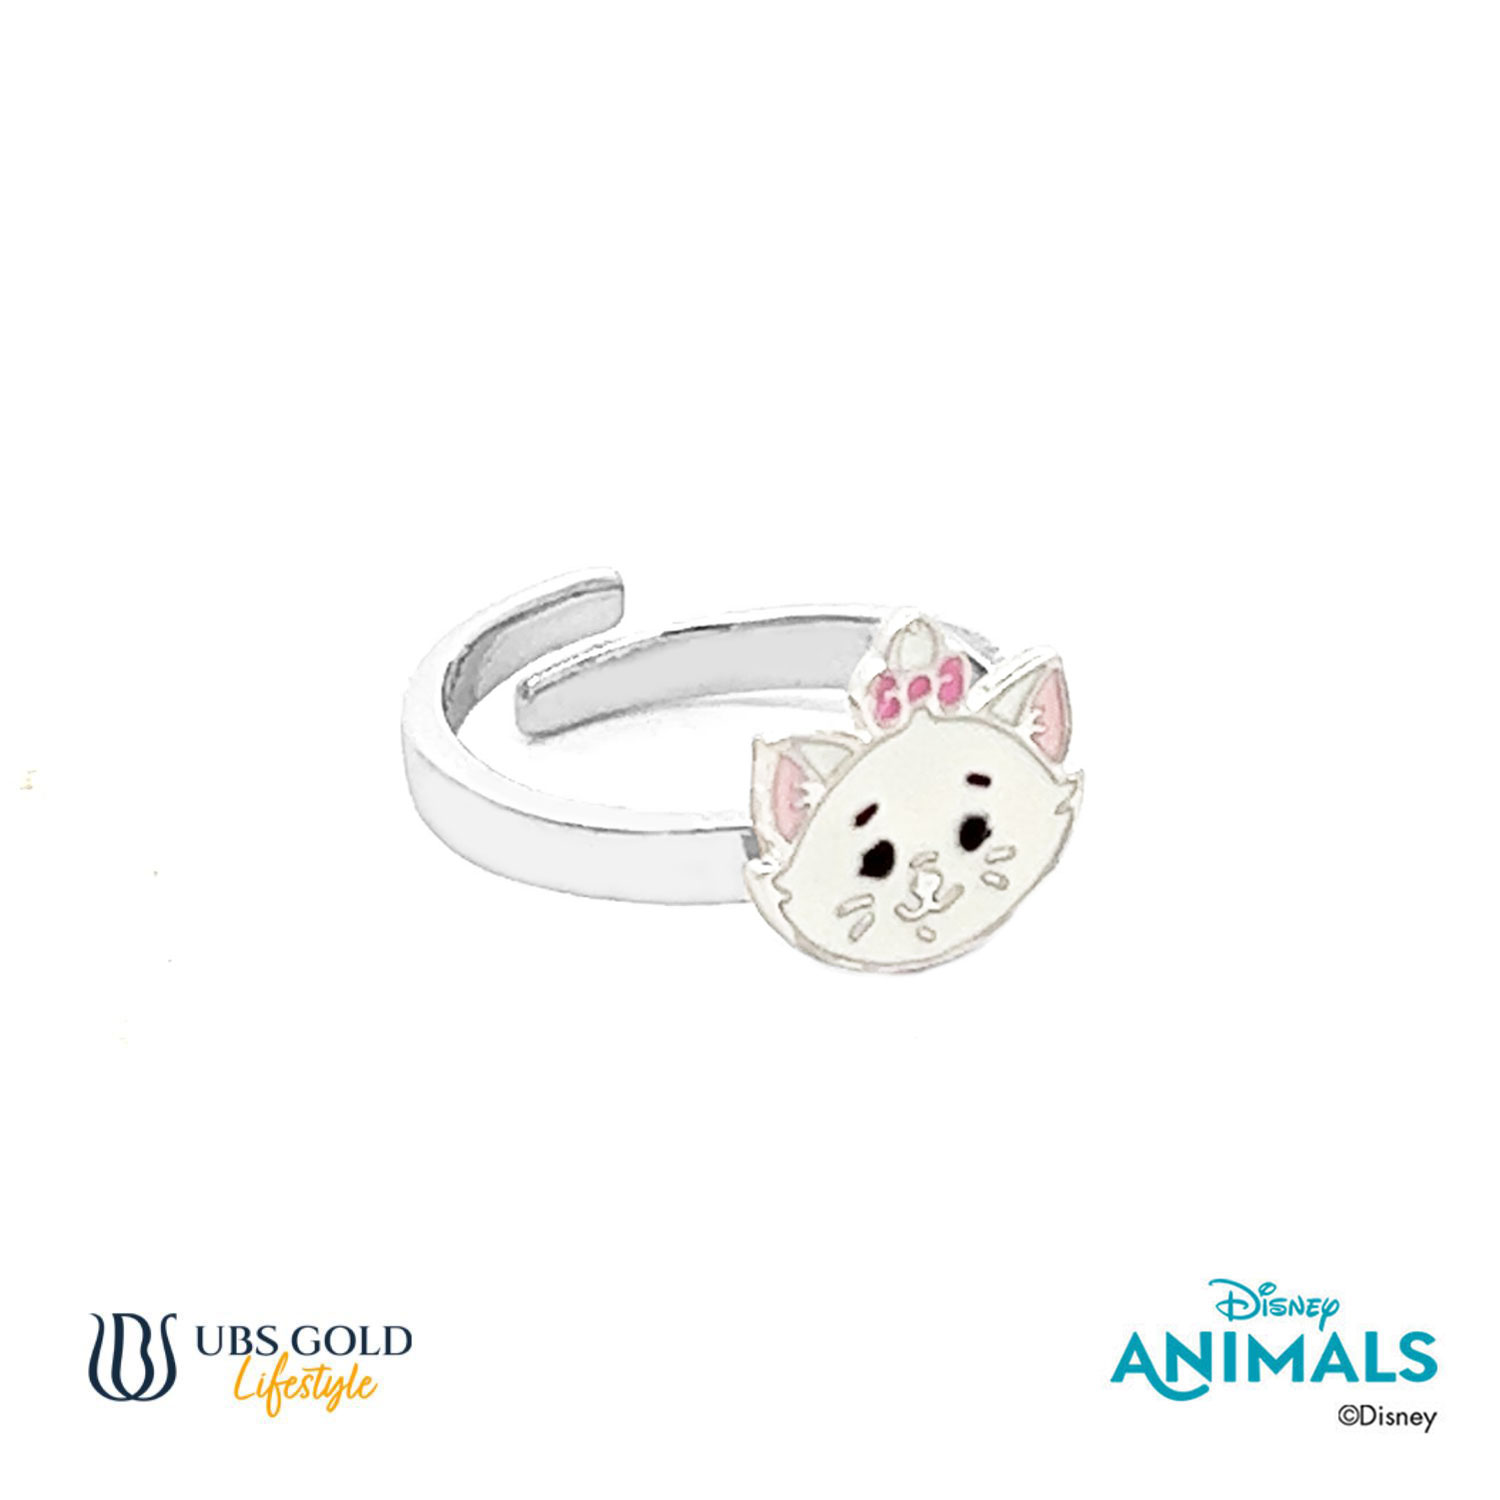 UBS Gold Cincin Emas Bayi Disney Animals - Cny0040 - 17K